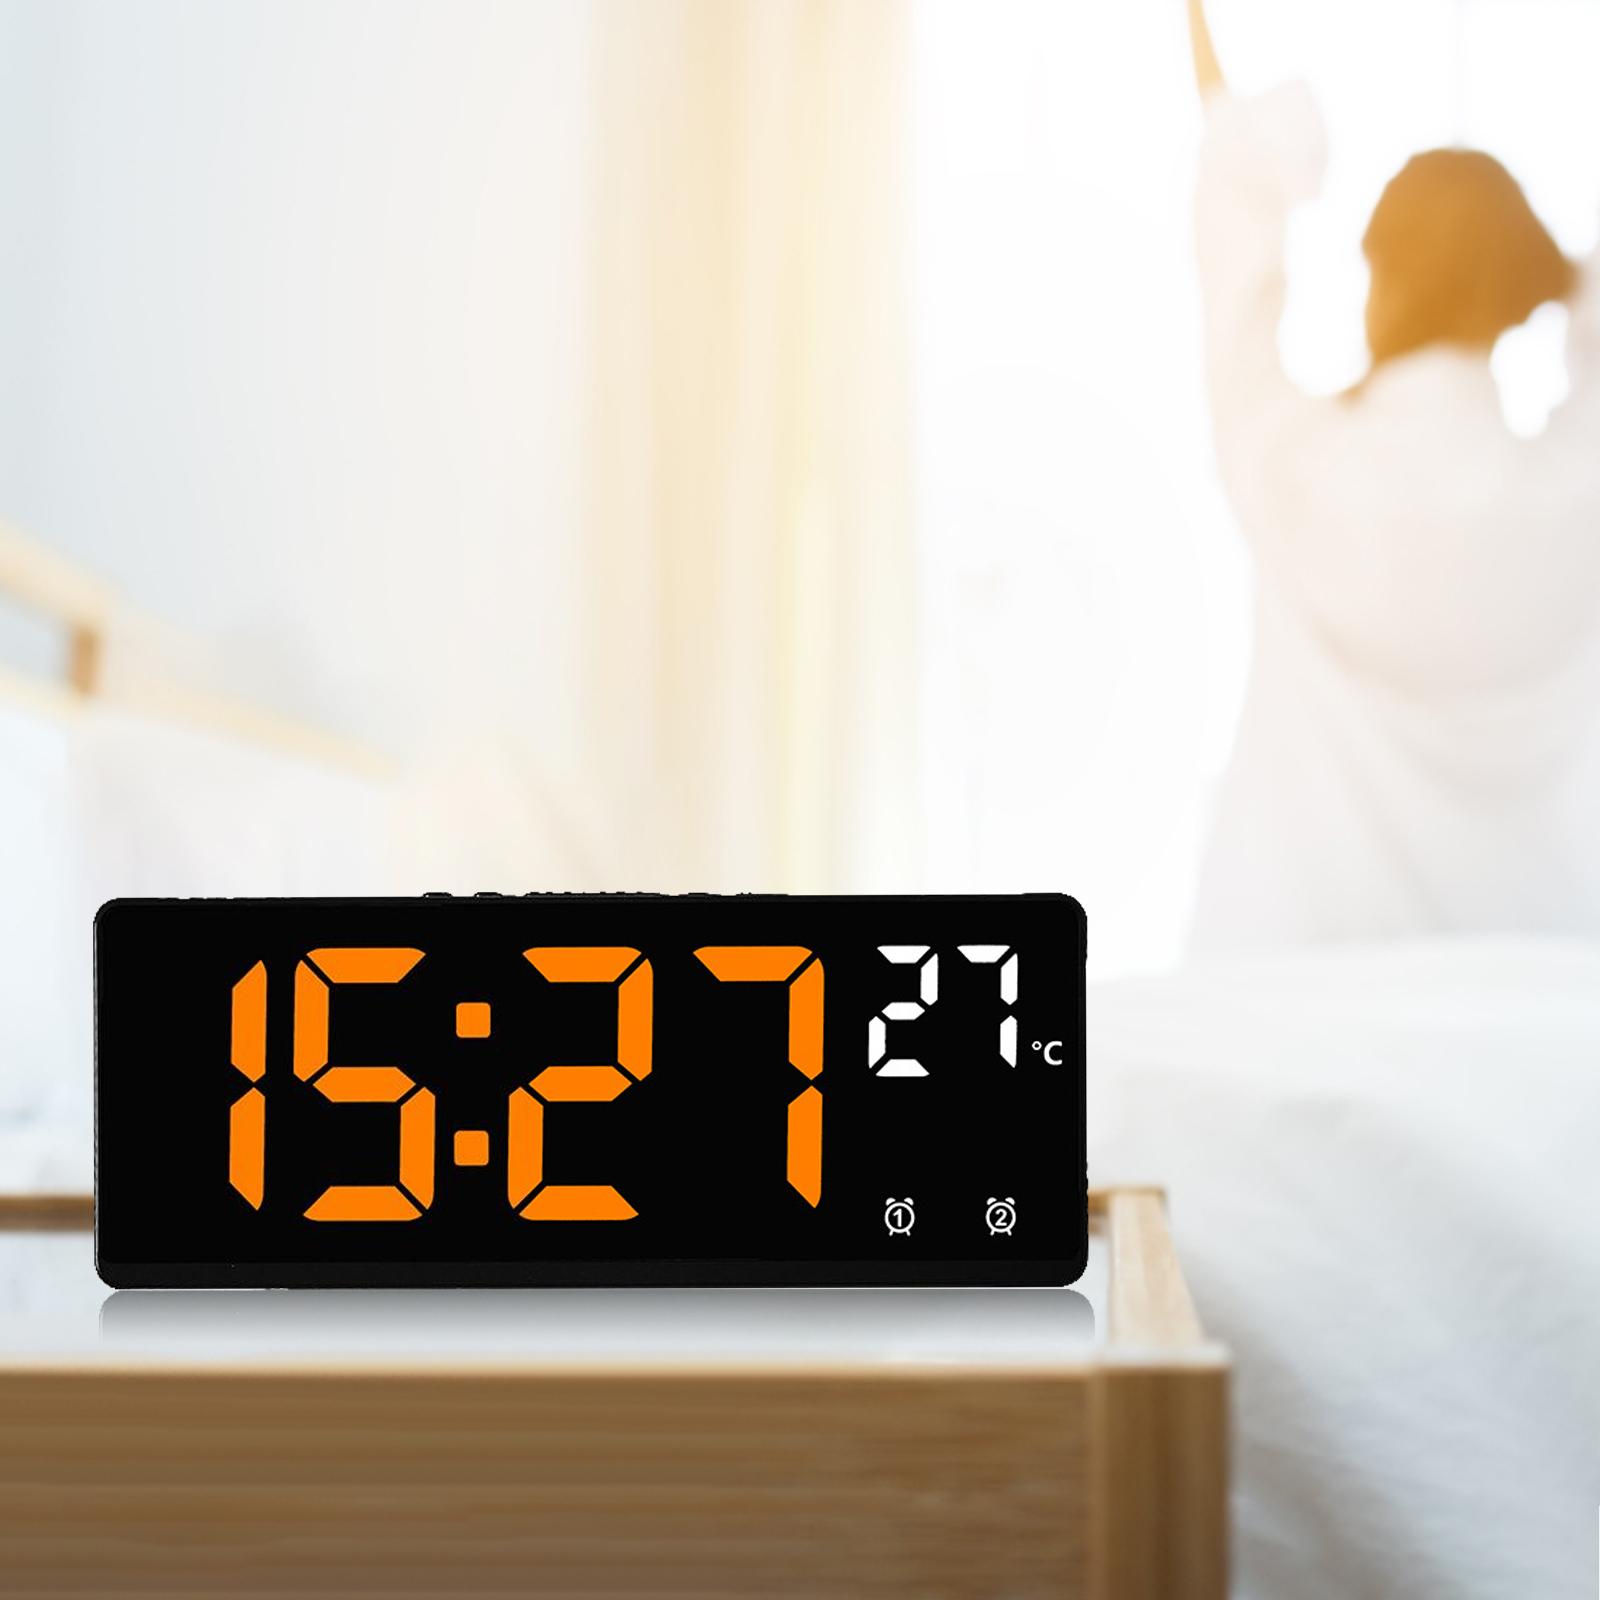 Digital Alarm Clock Simple Dimmable Large Display for Office Bedroom Orange Numbers